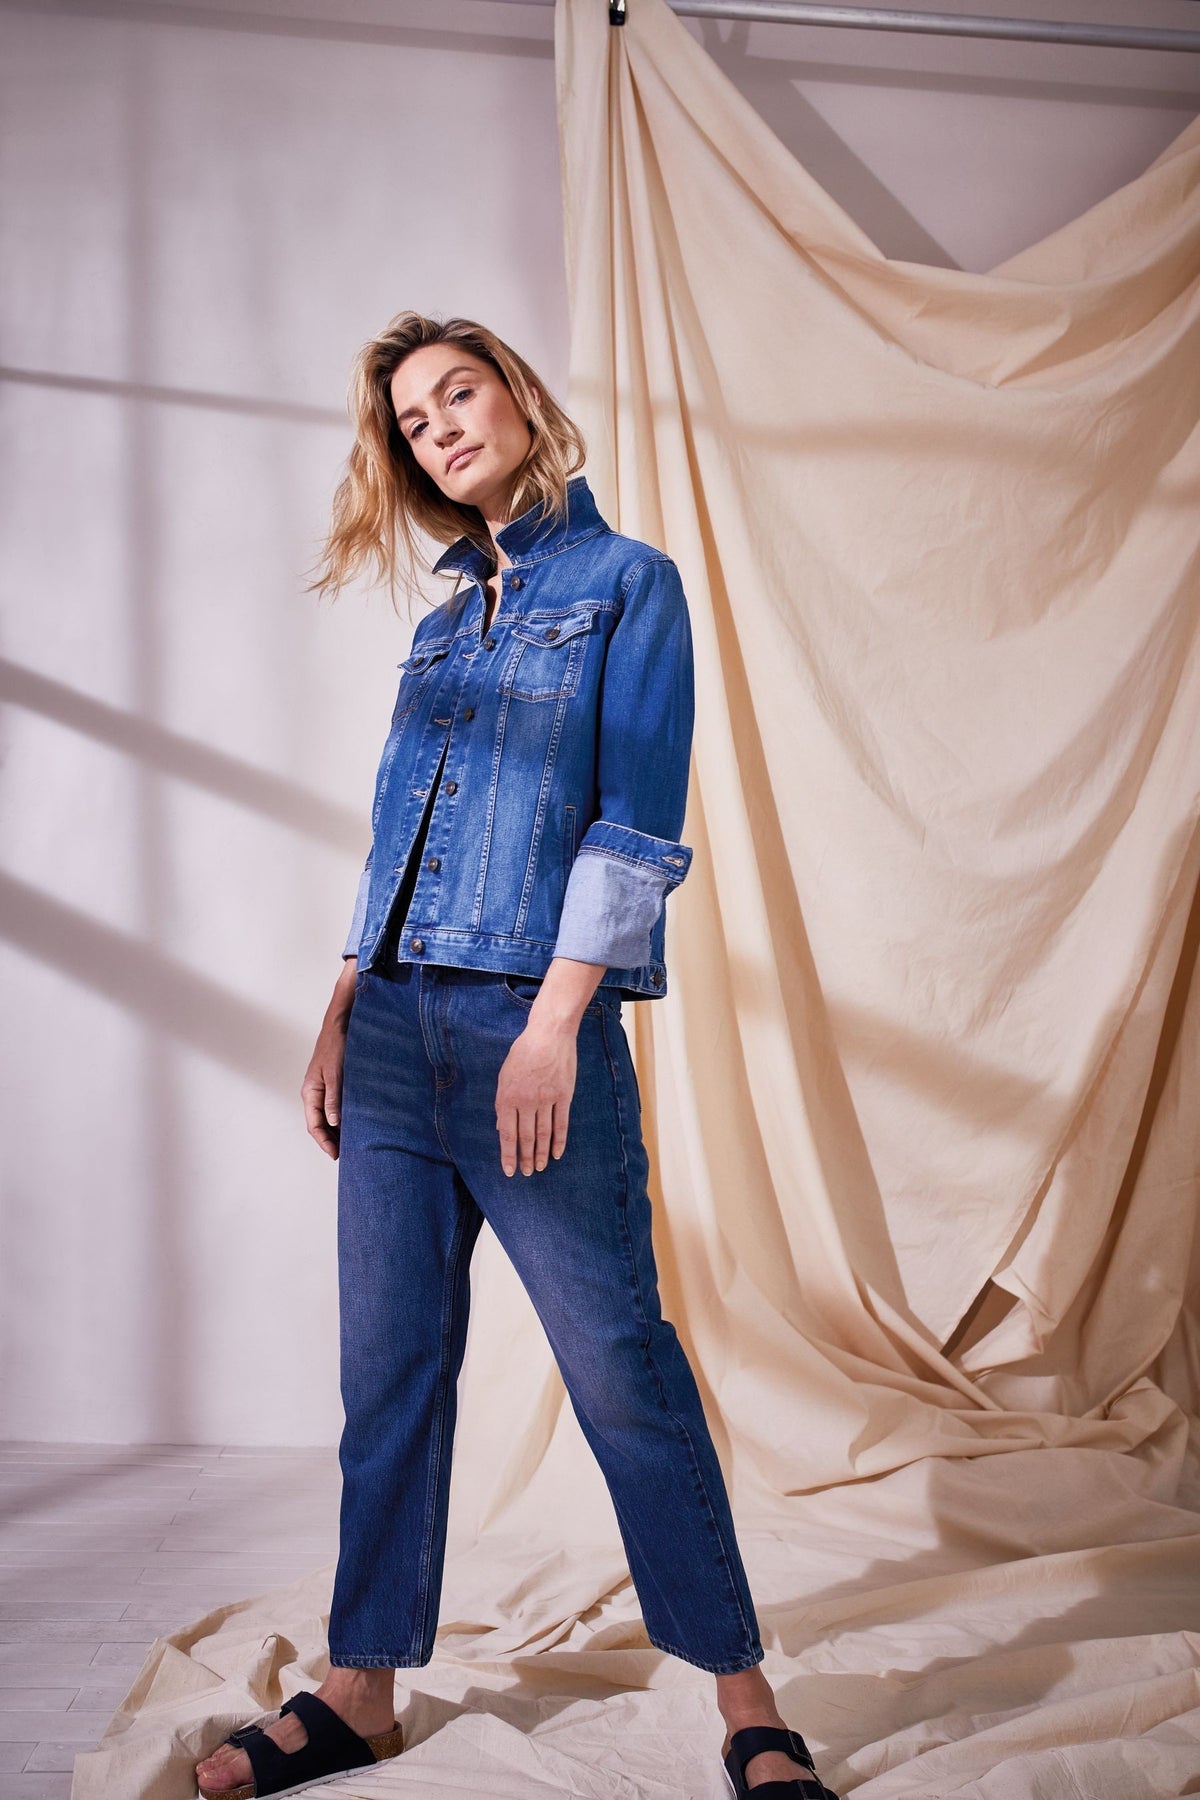 Stylish blue denim jacket and jeans on female model in studio